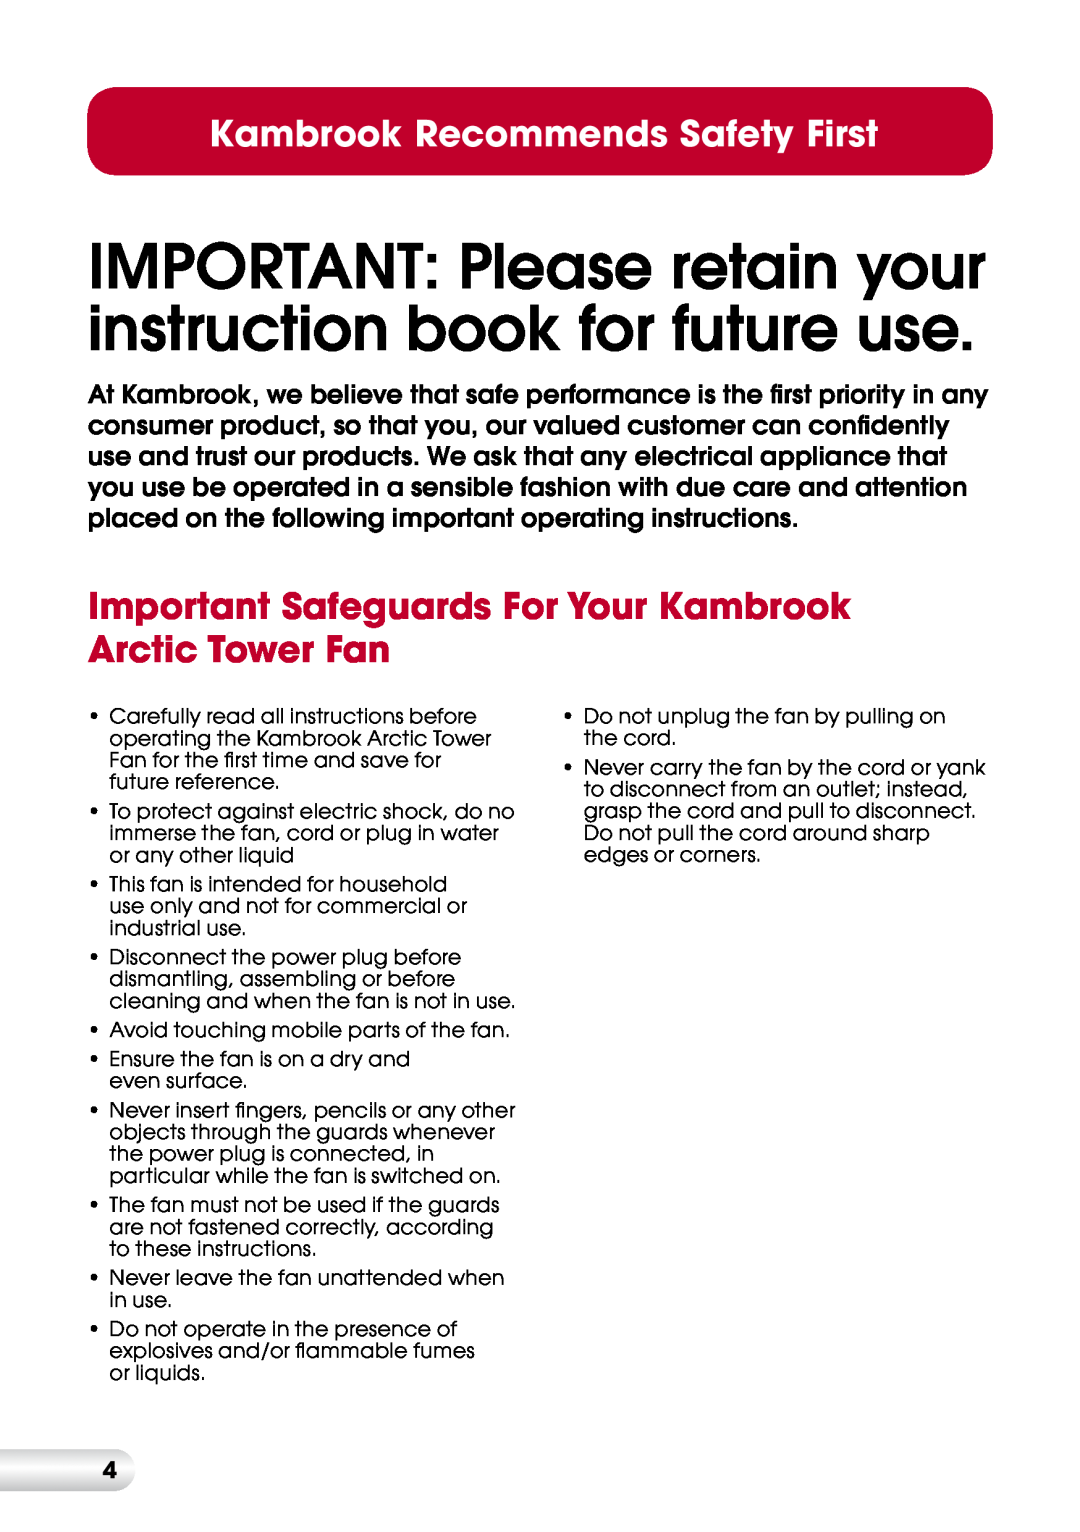 Kambrook KFA815 manual Kambrook Recommends Safety First 